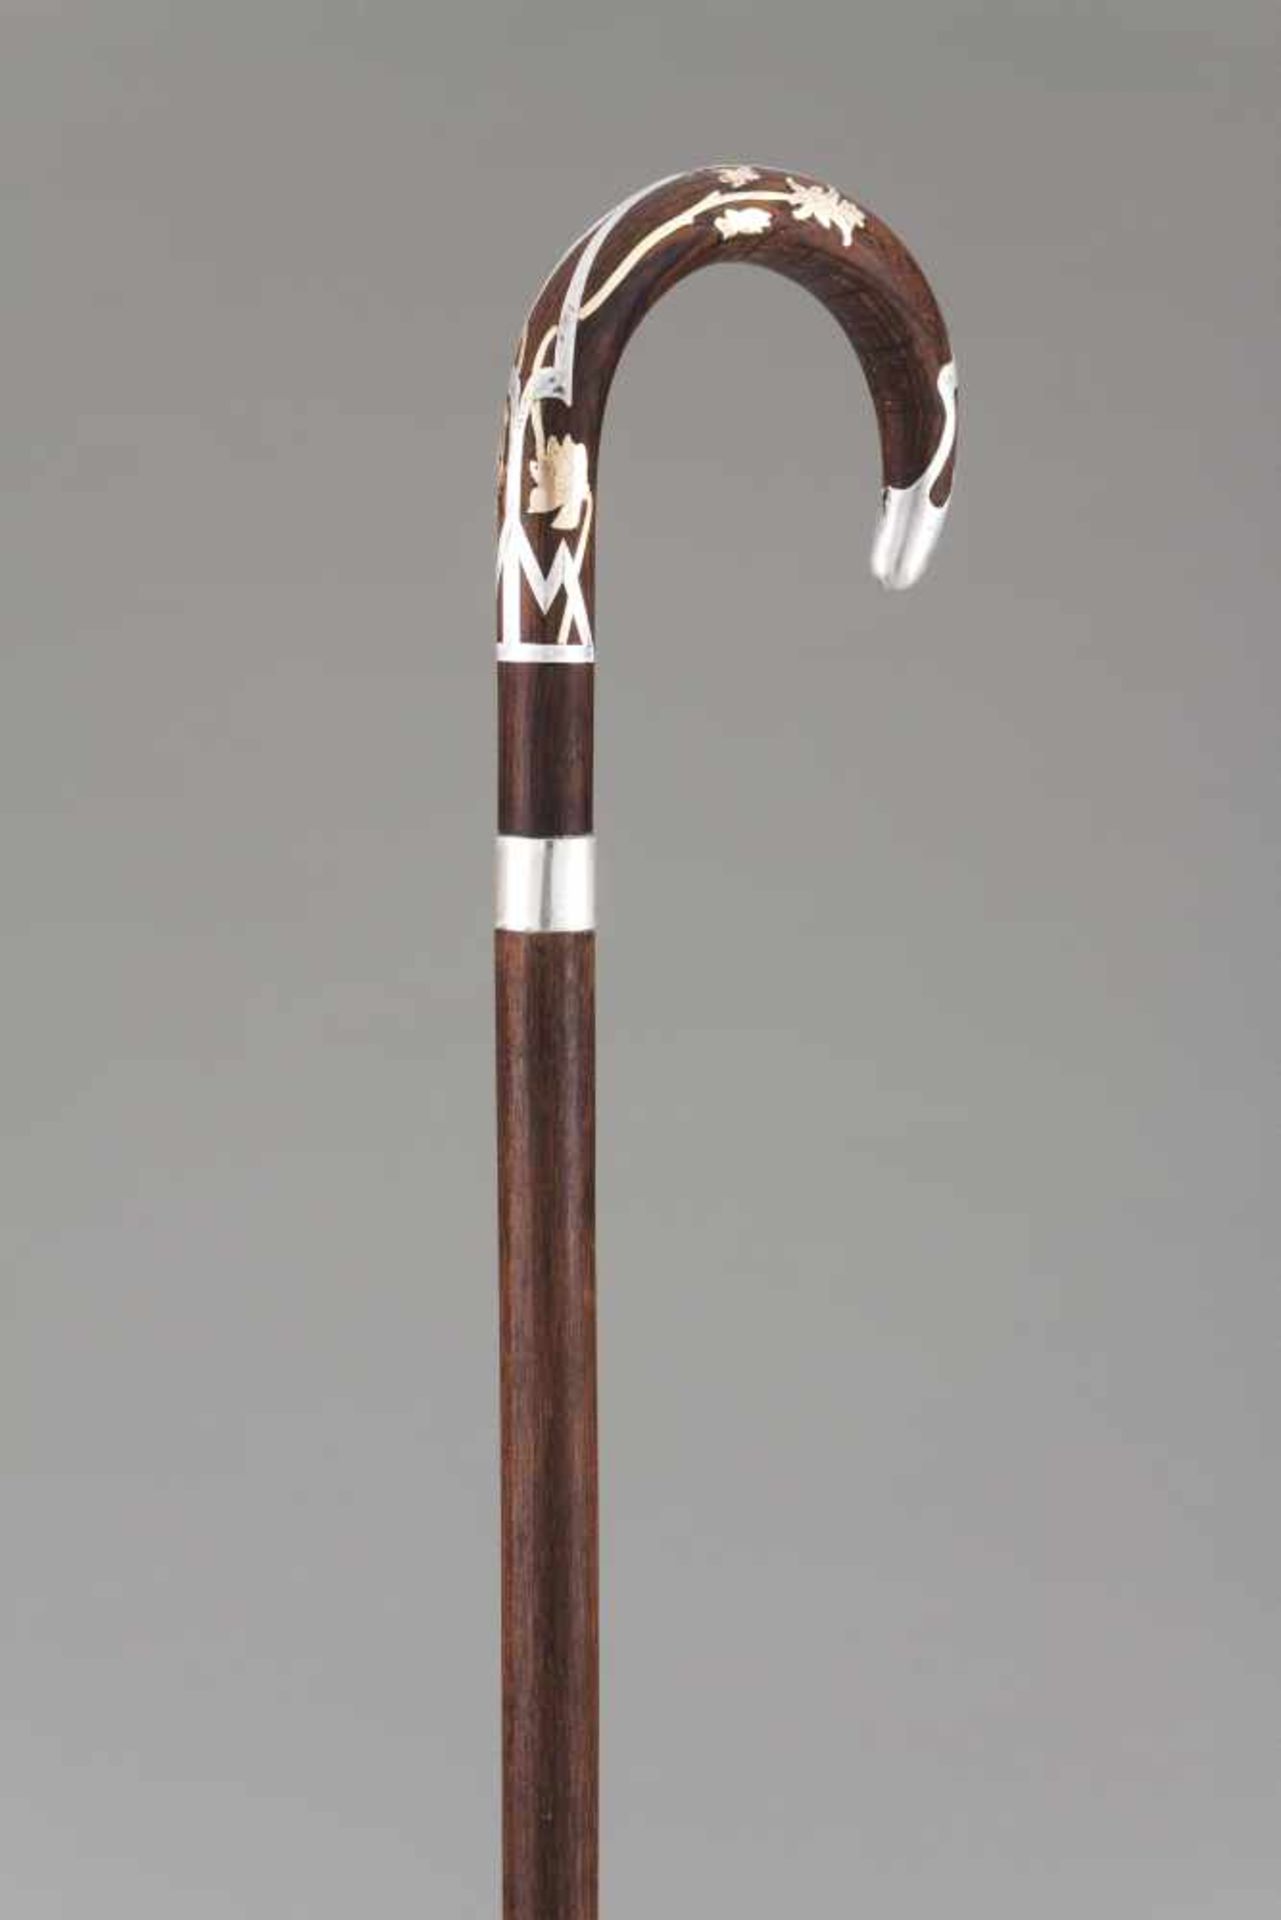 An Art Nouveau walking stick